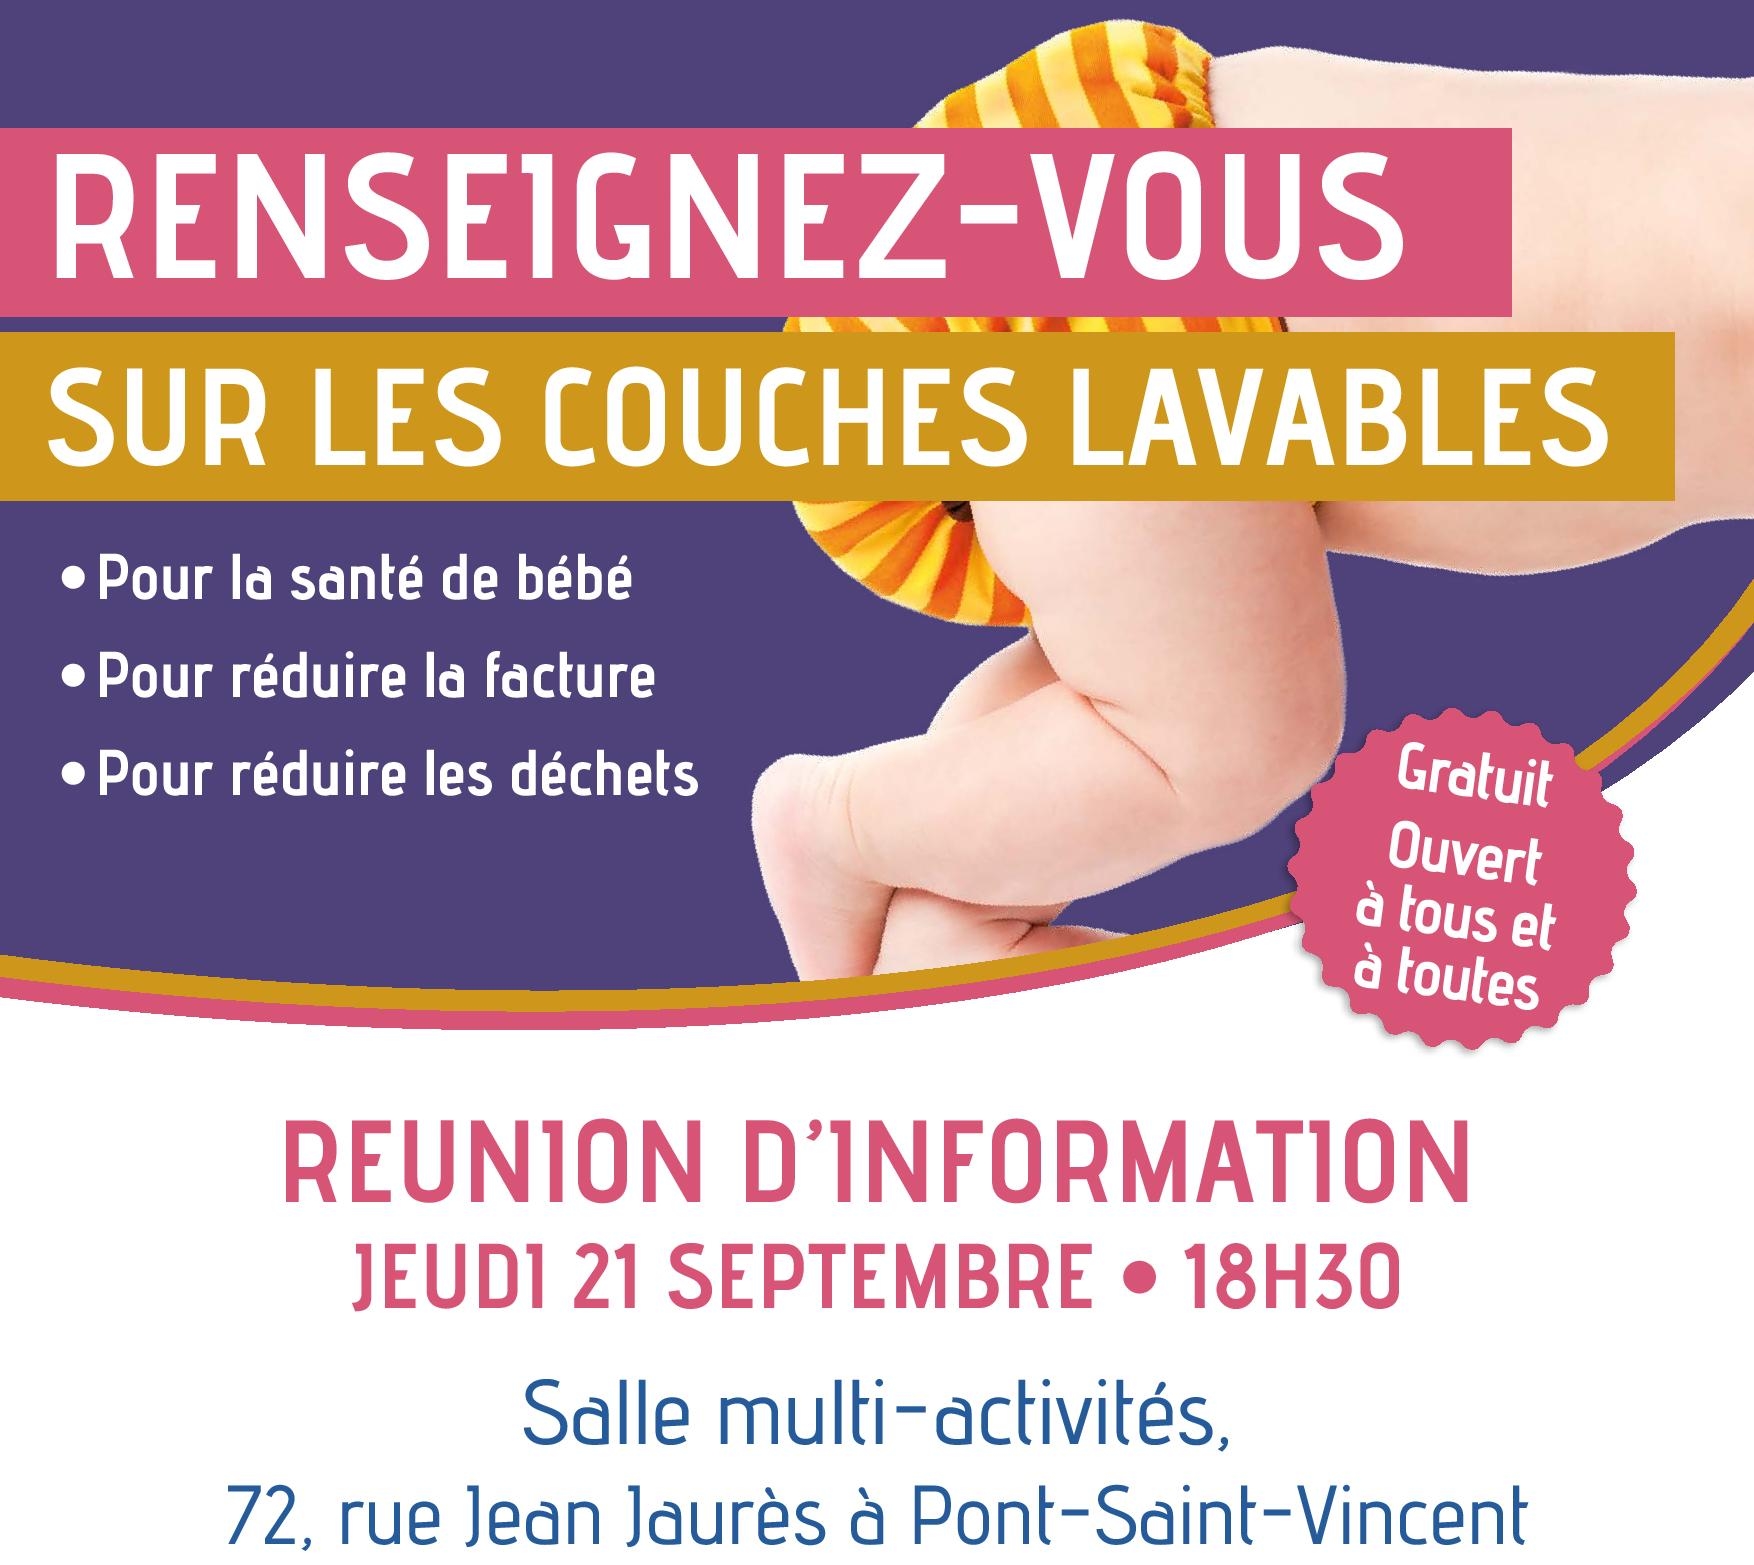 You are currently viewing Réunion d’information sur les couches lavables !